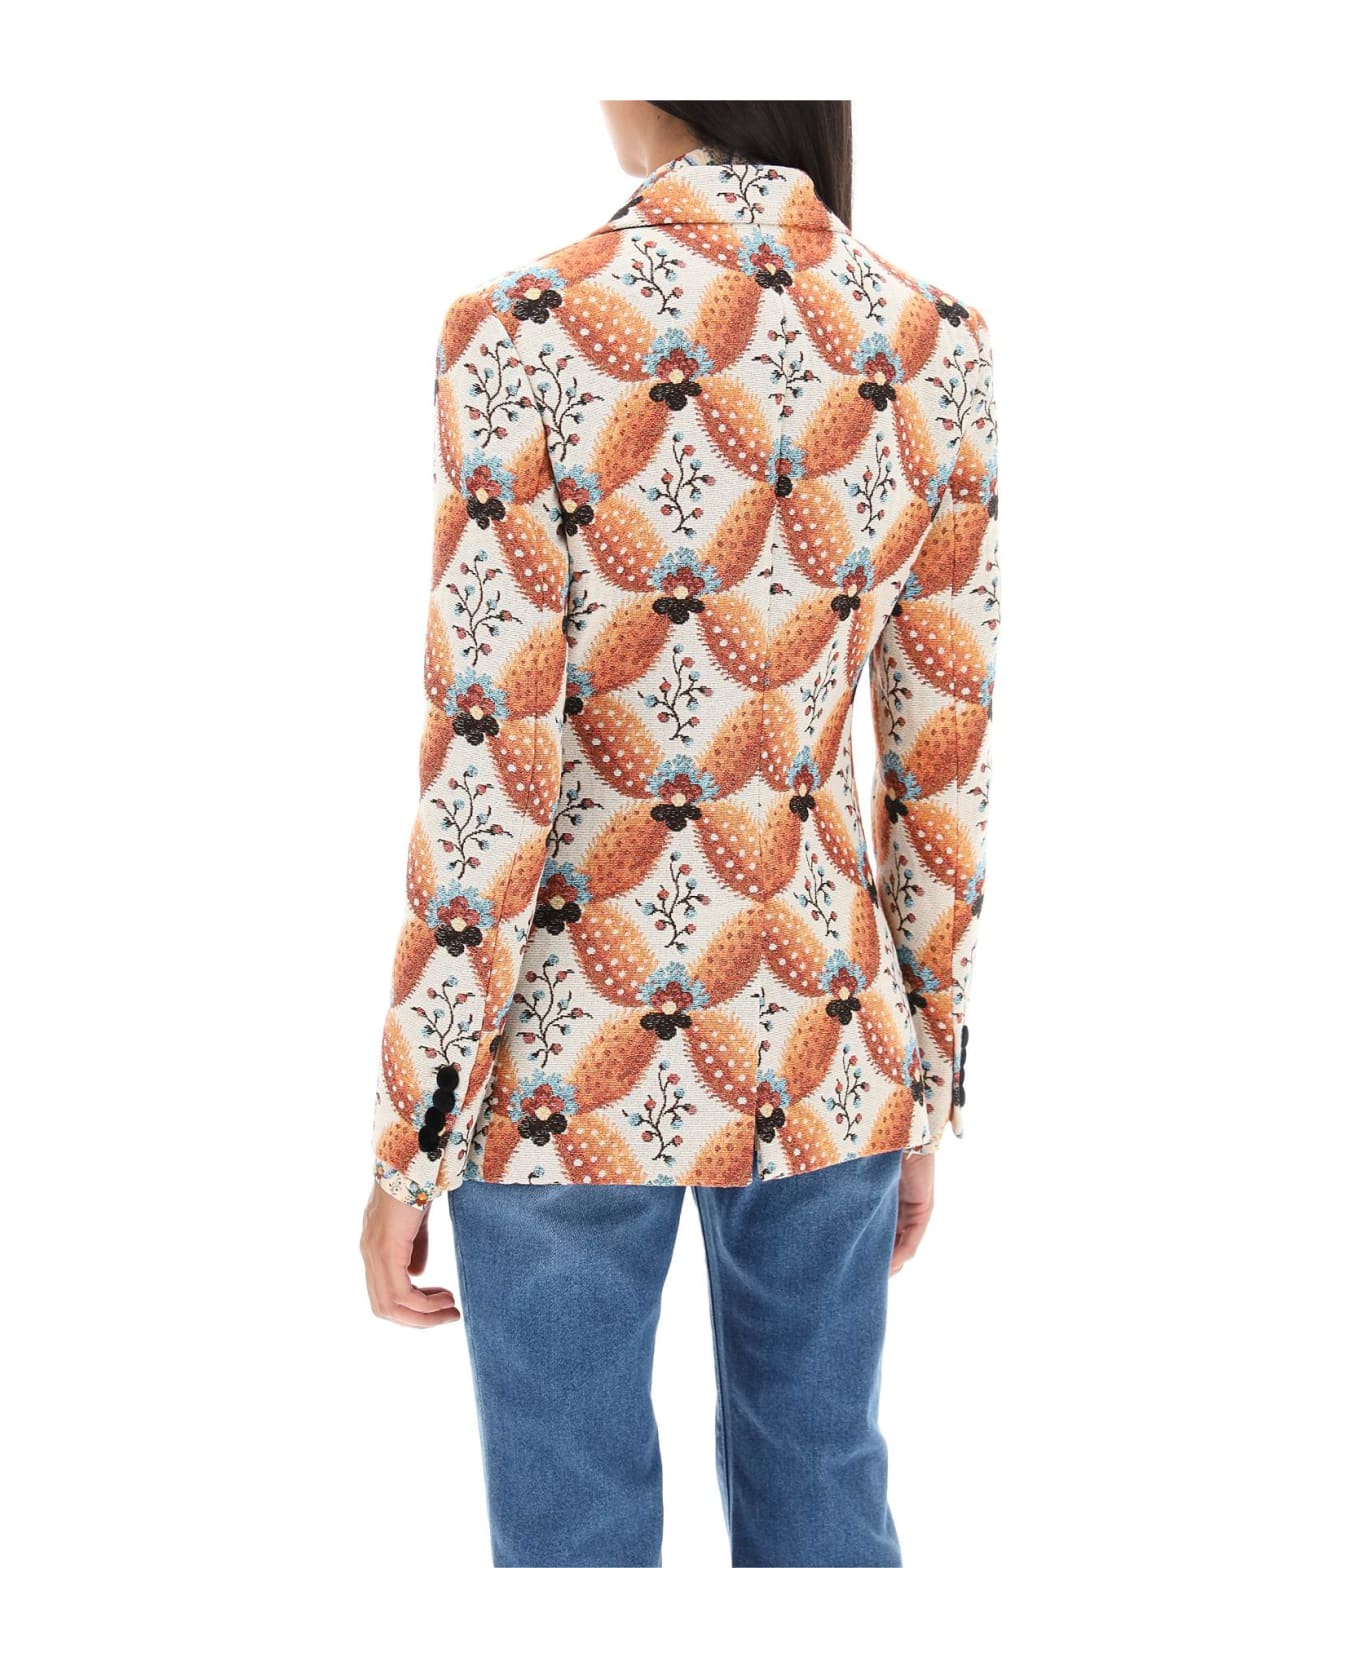 Etro Jacquard Jacket With Floral Motif - ORANGE (Beige)